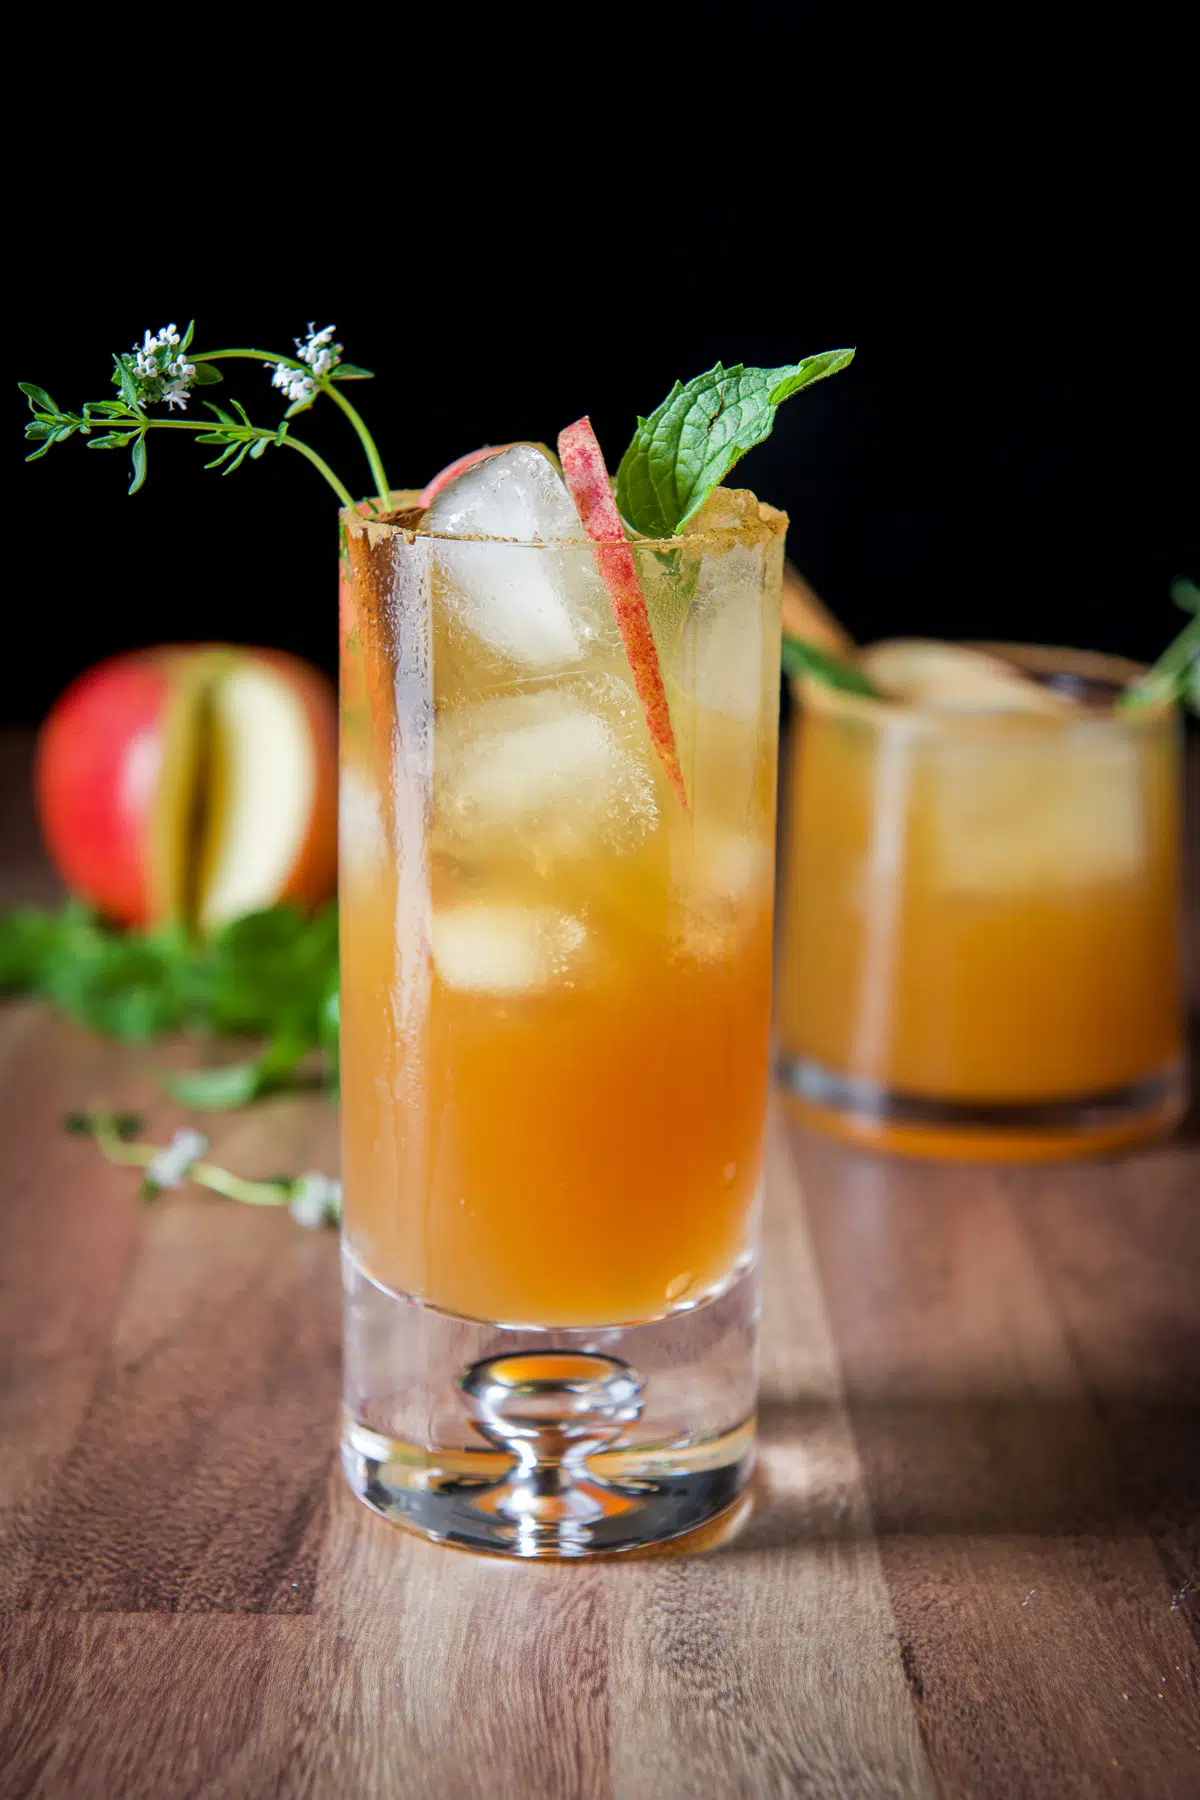 Apple Cider Aperol Spritz